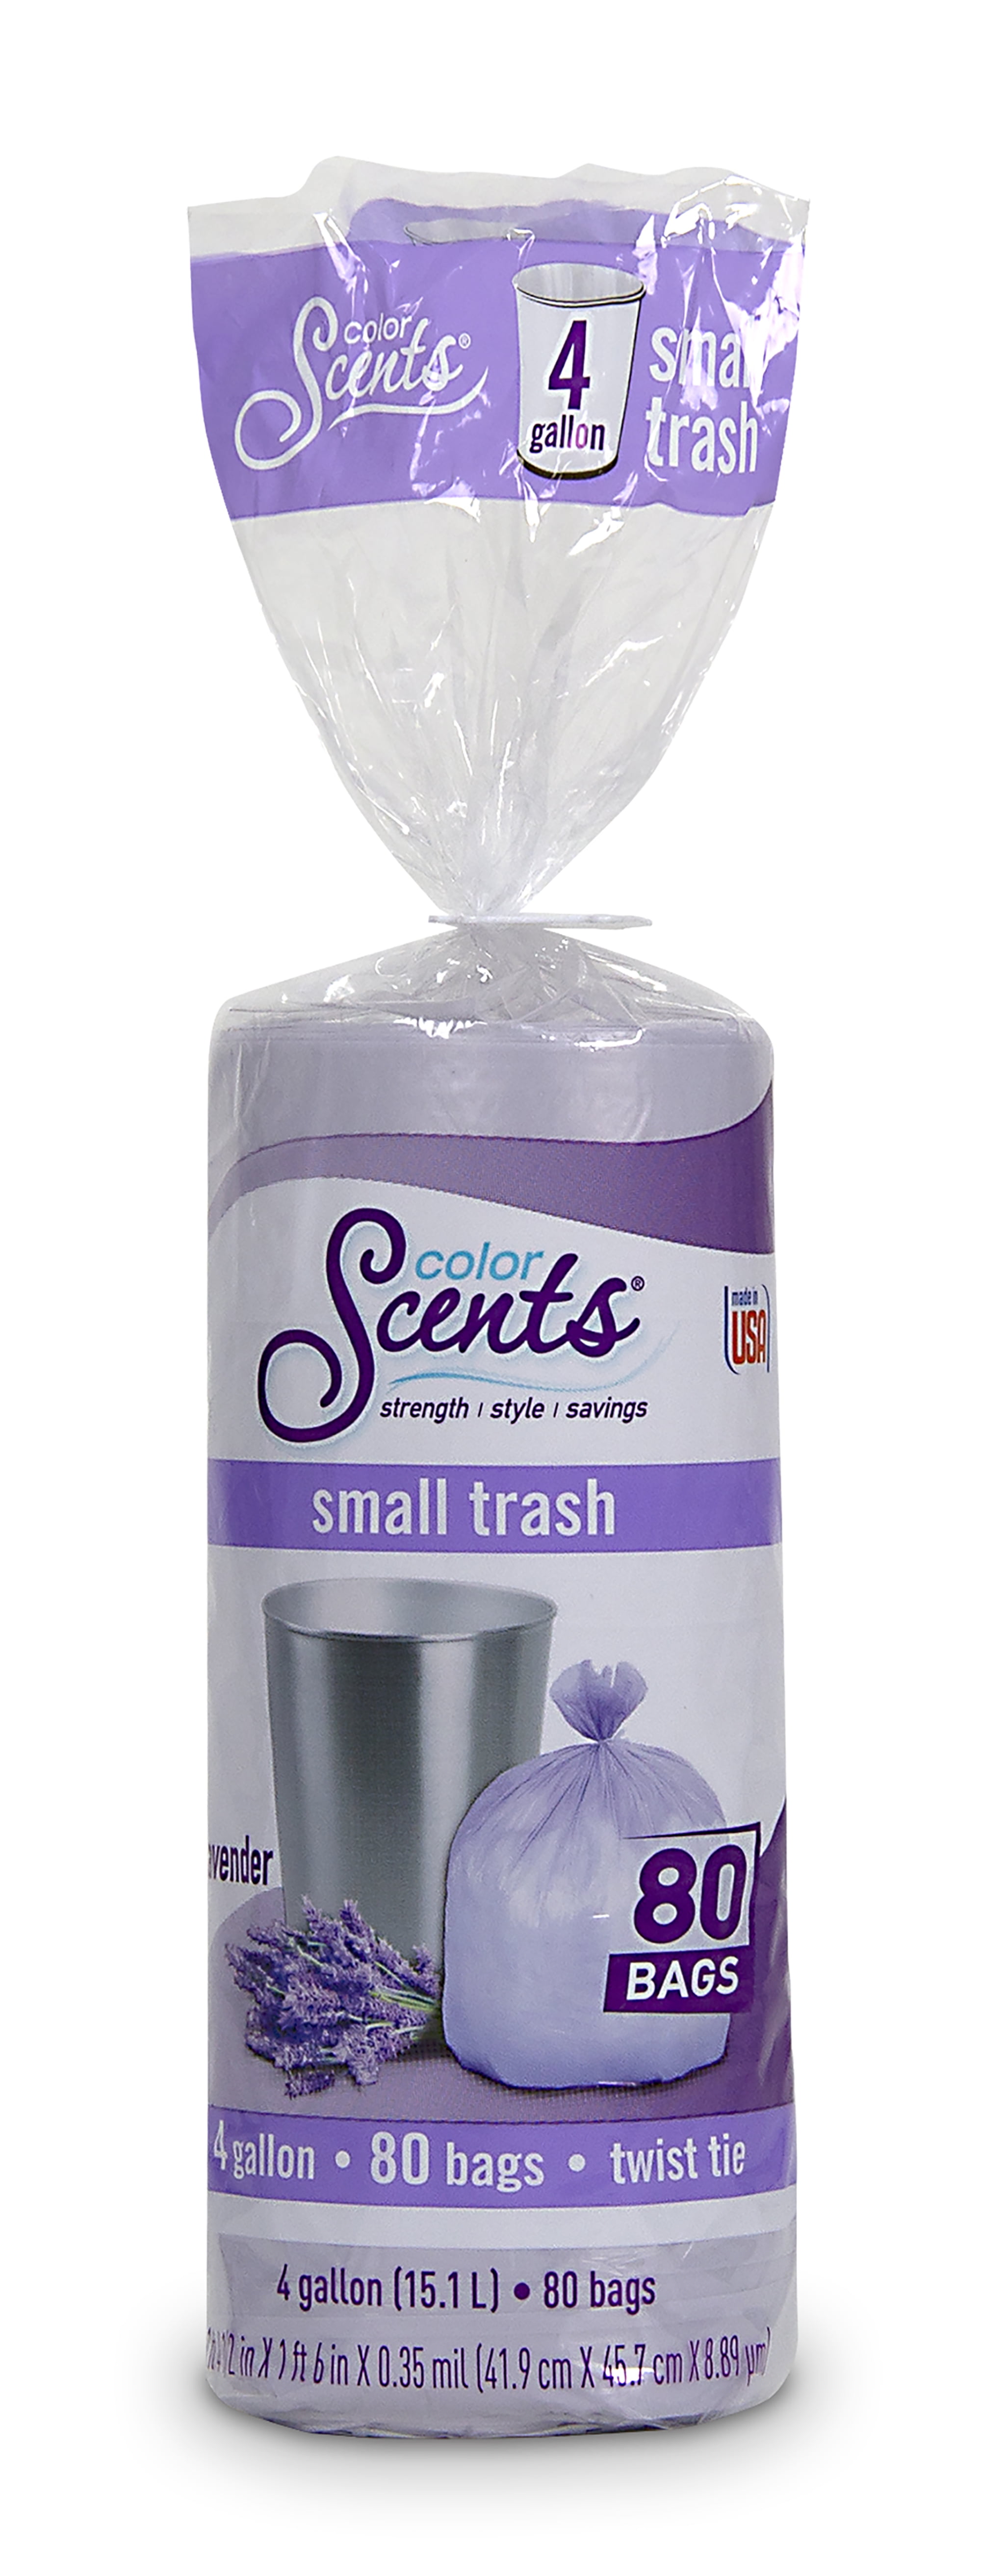 Color Scents Small Trash Bags, 4 Gallon, 80 Bags (Lavender Scent, Twist  Tie) 